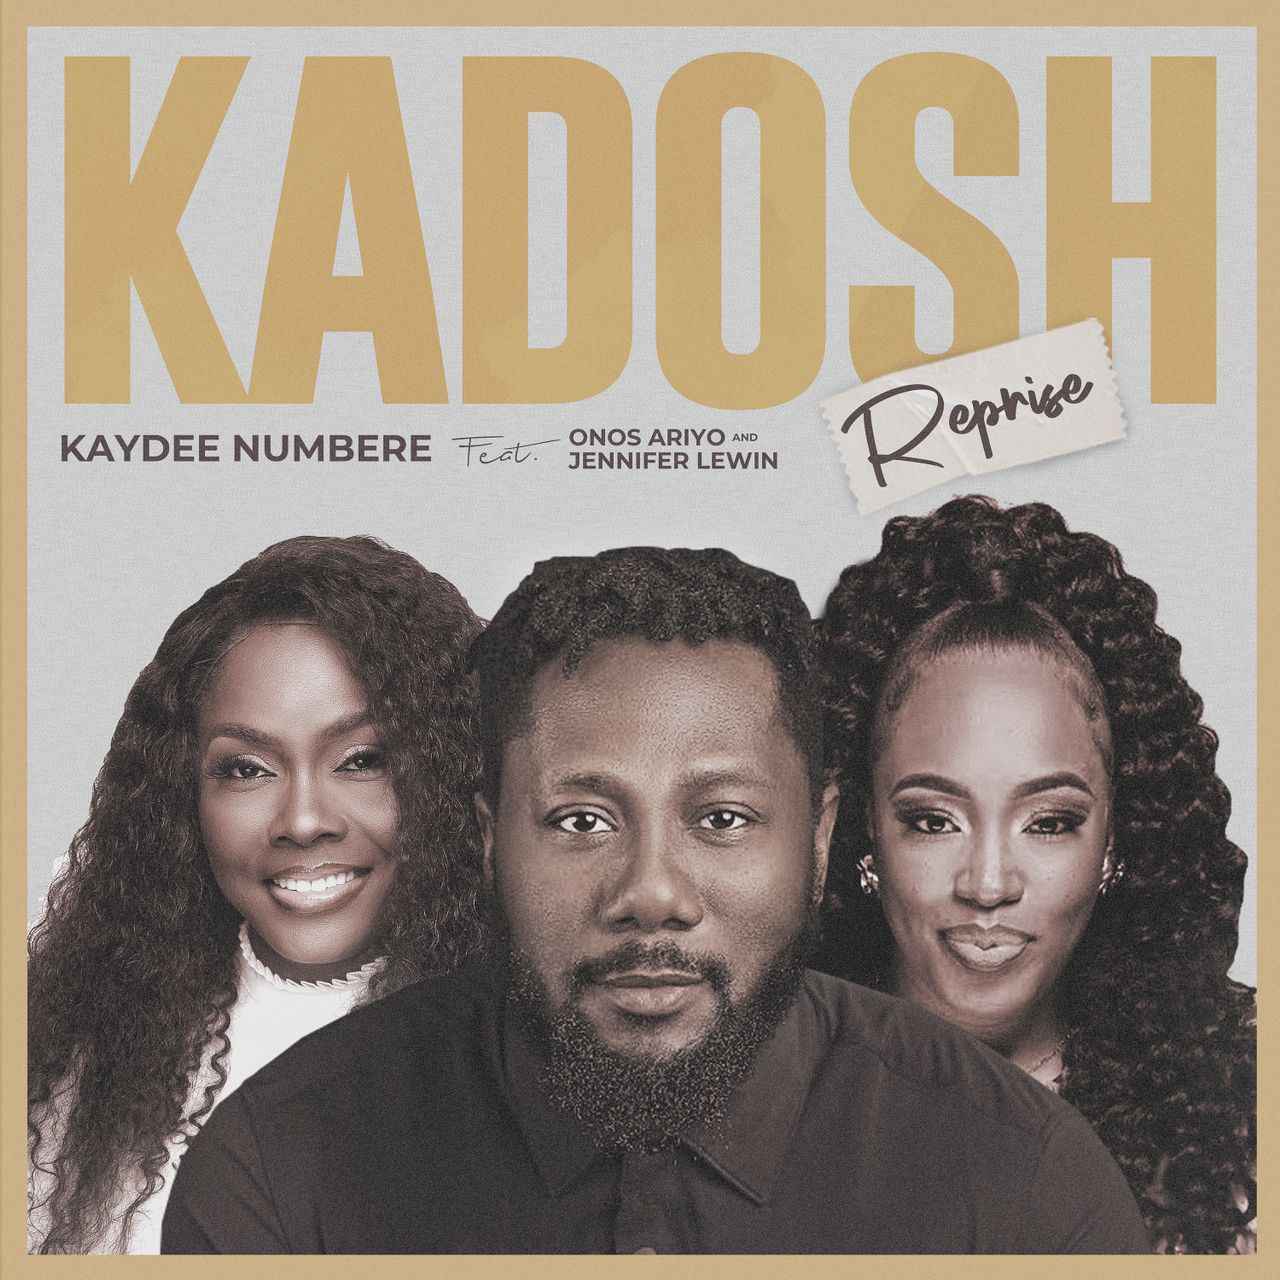 KADOSH - Kaydee Numbere